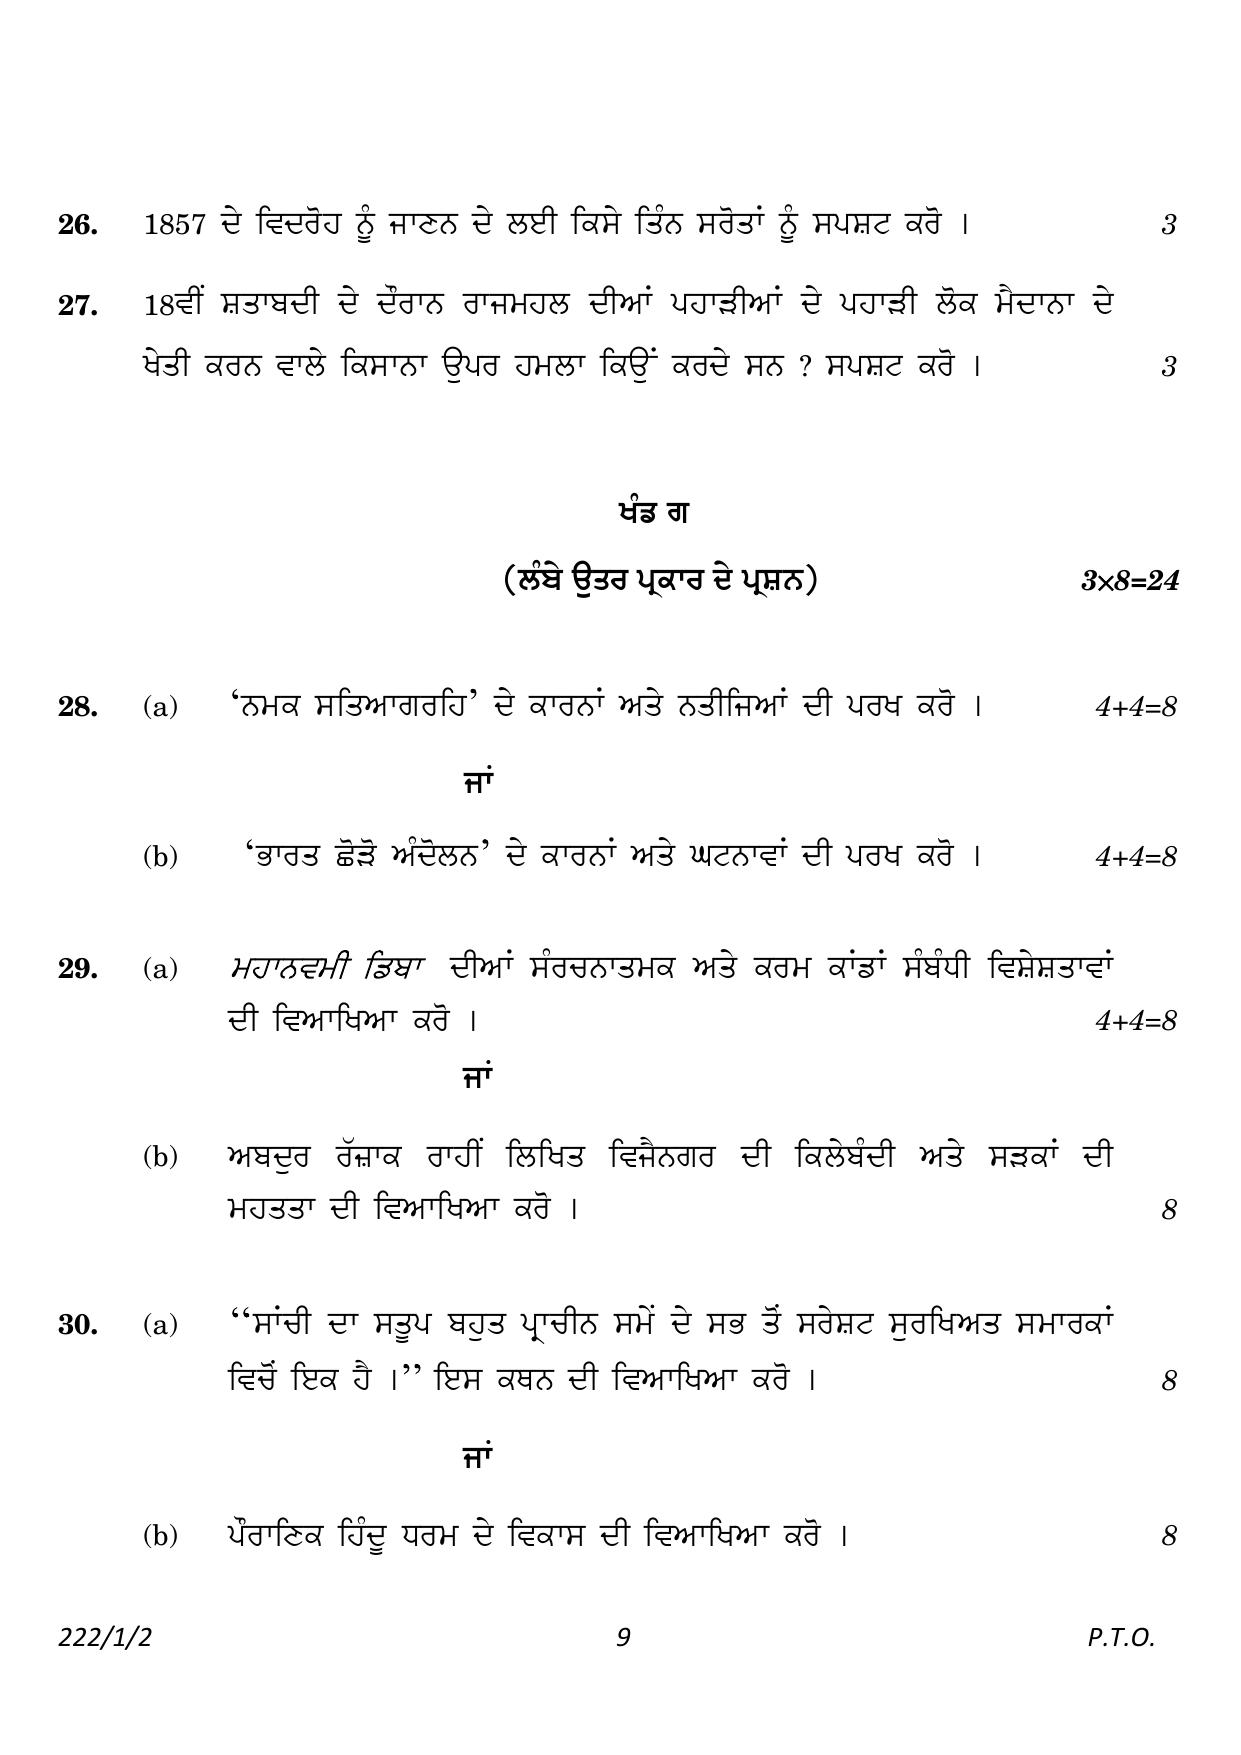 CBSE Class 12 222-1-2 History Punjabi version 2023 Question Paper - Page 9